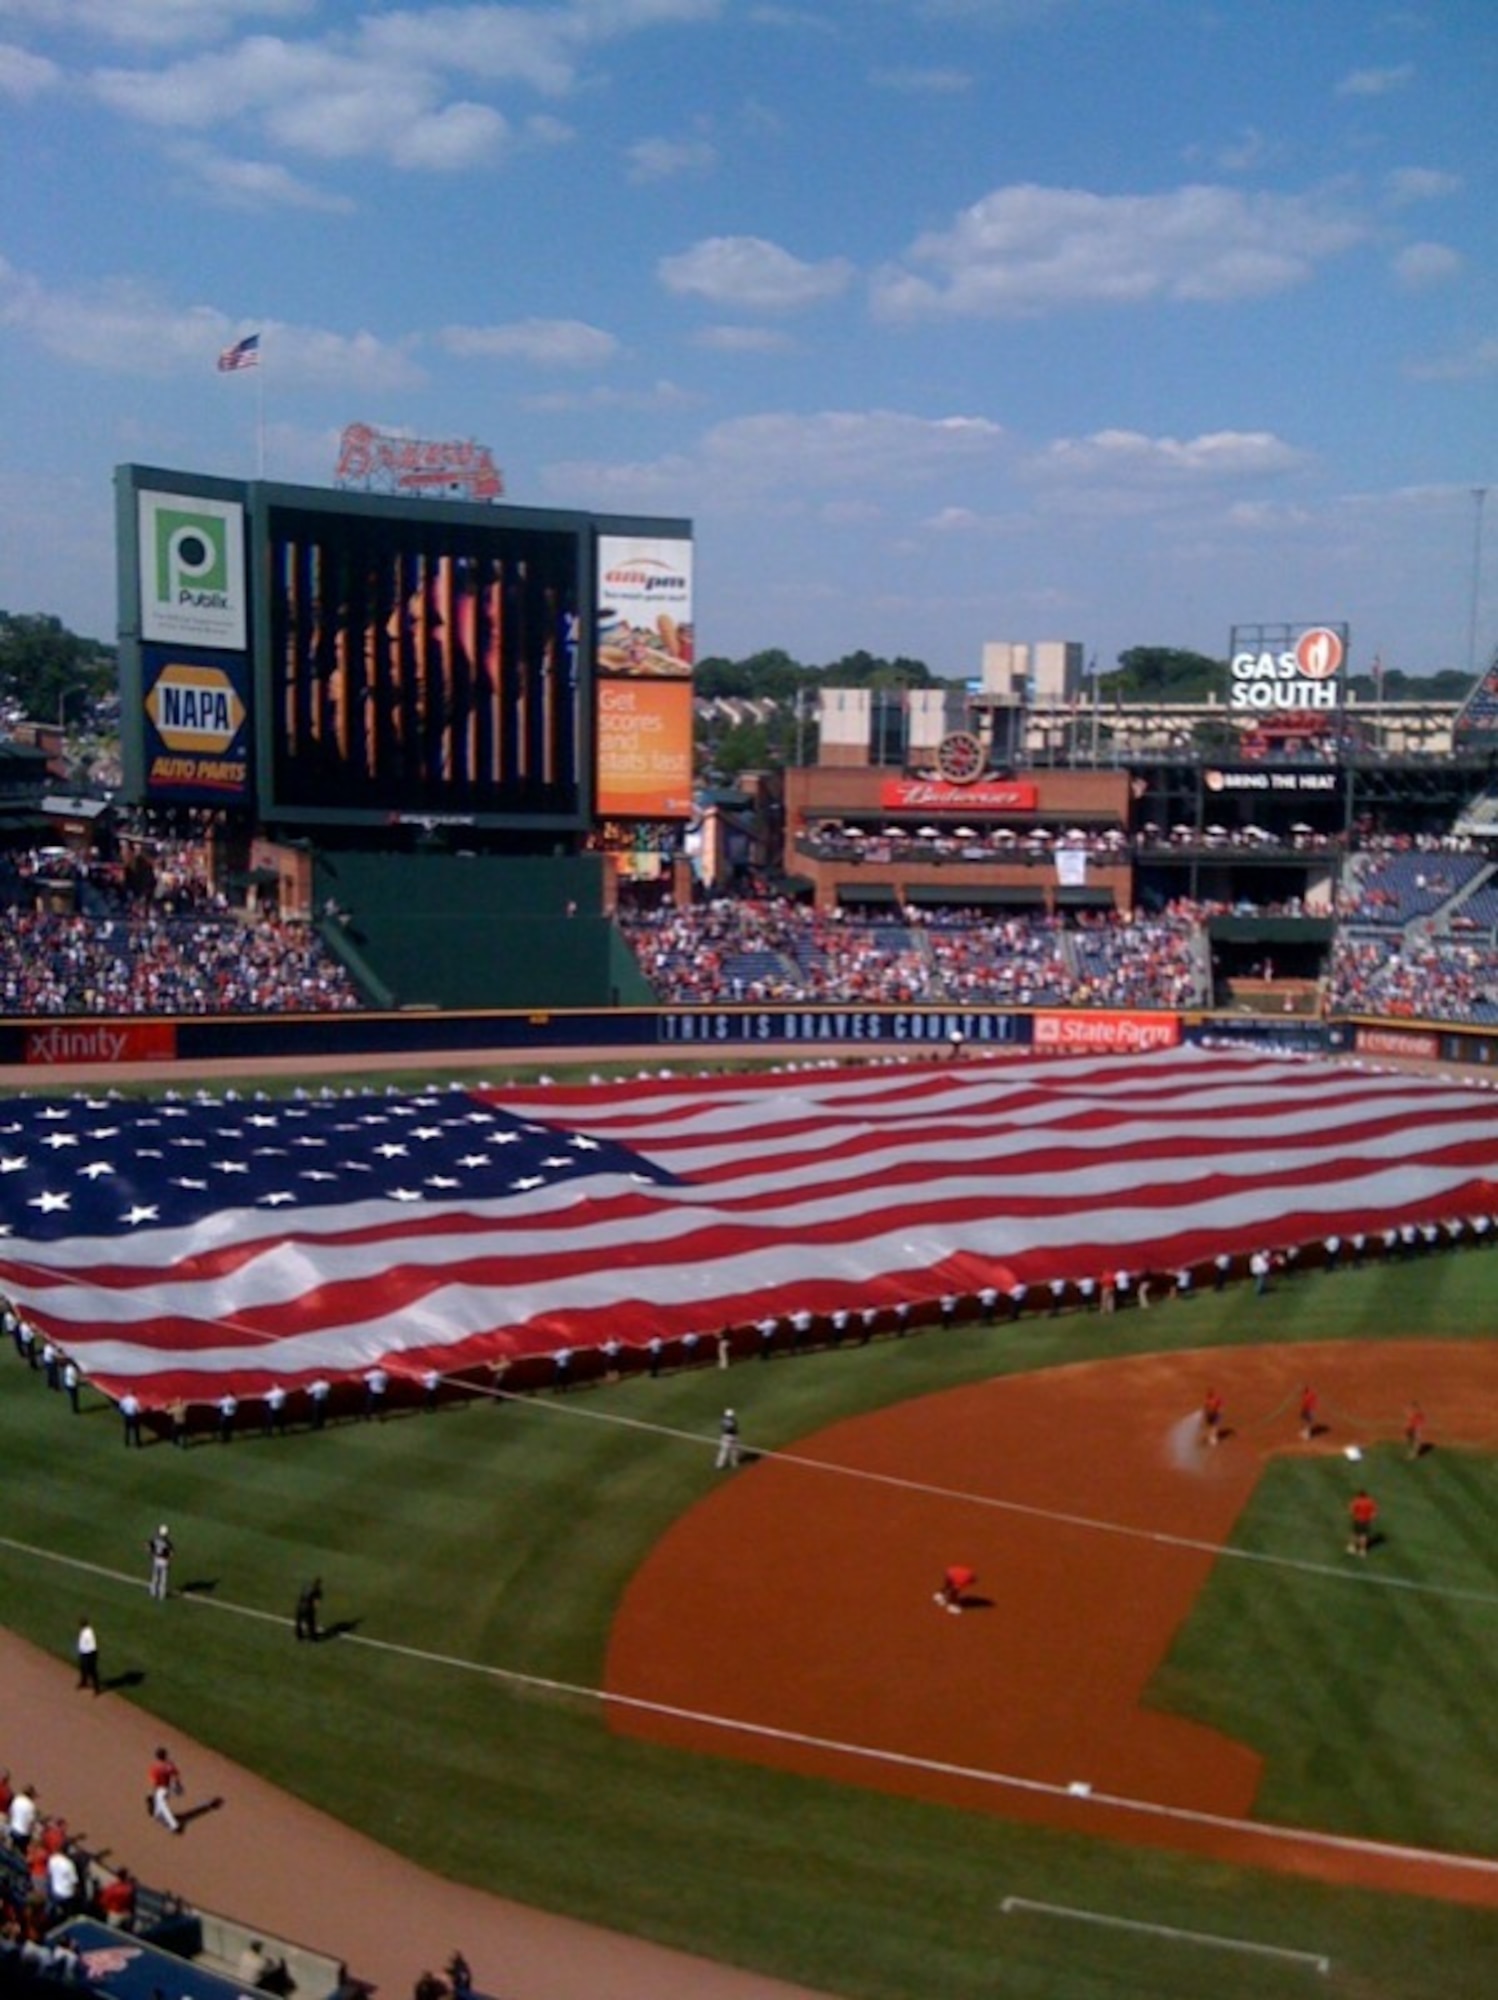 Airmen unfurl 'Superflag' at Braves baseball game > Air Force